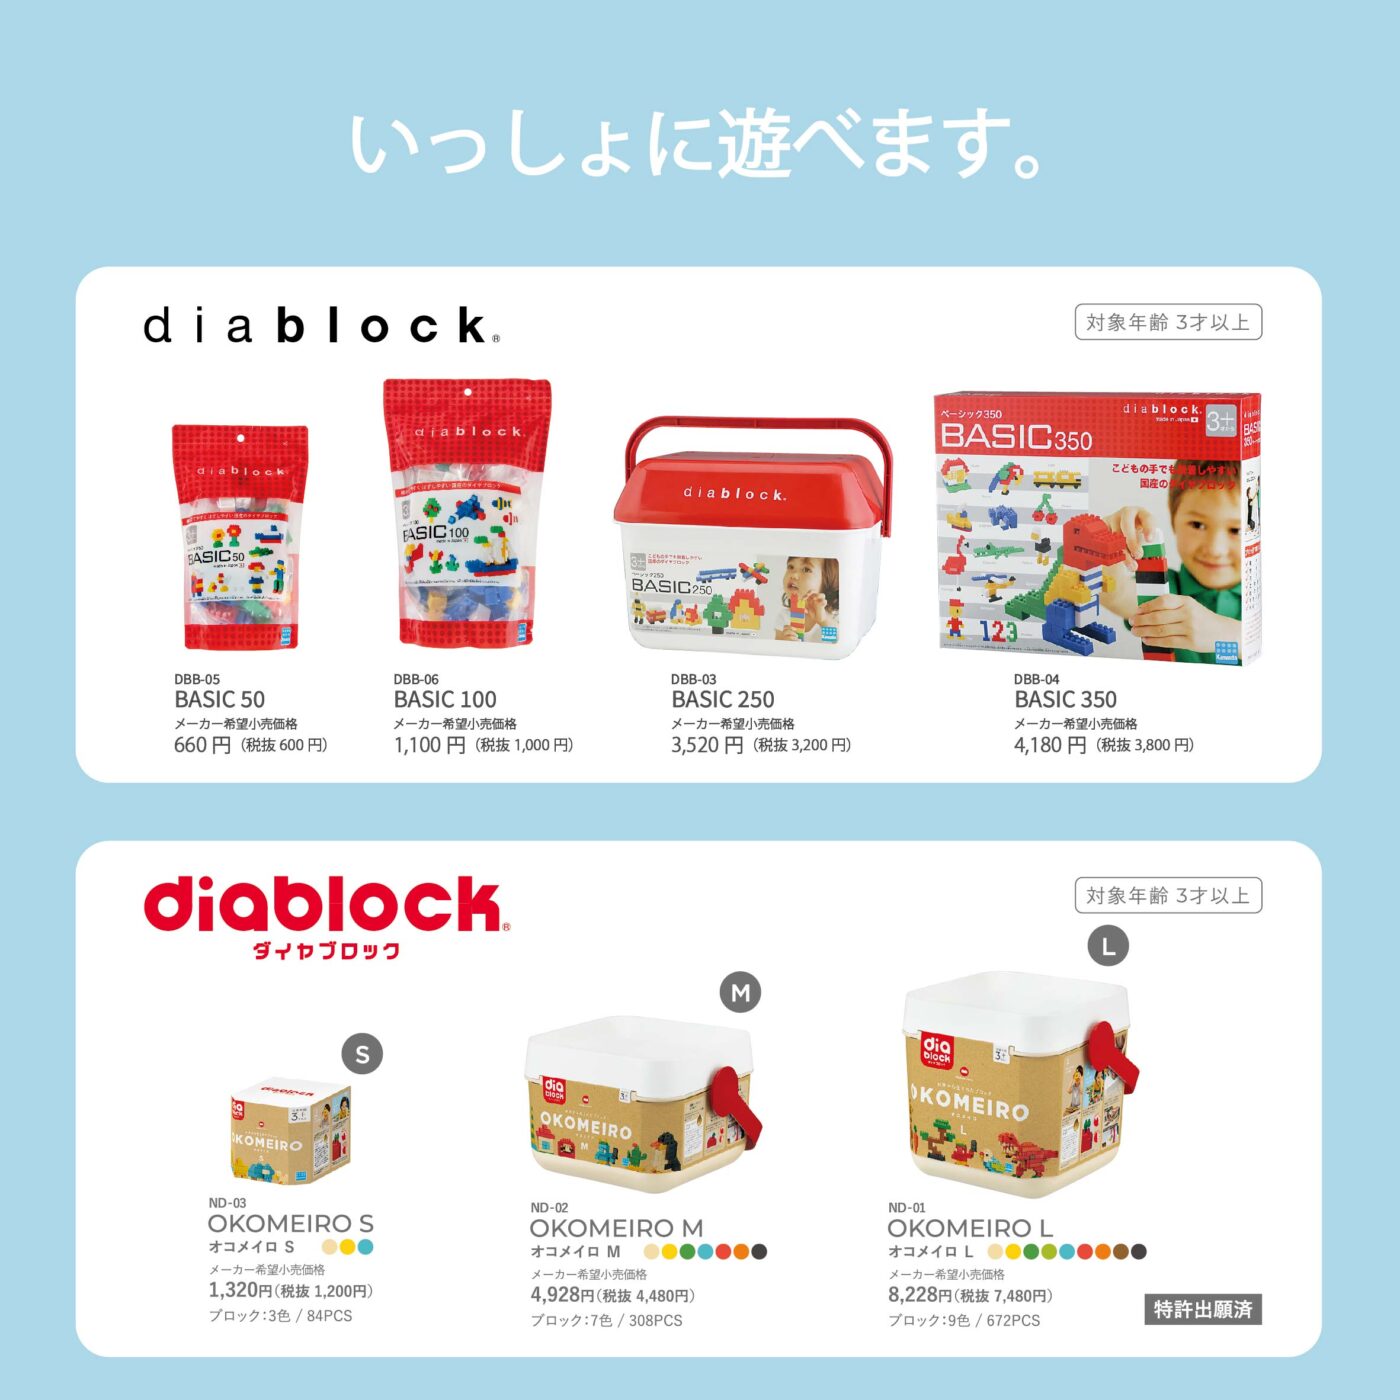 Product image of OKOMEIRO S7